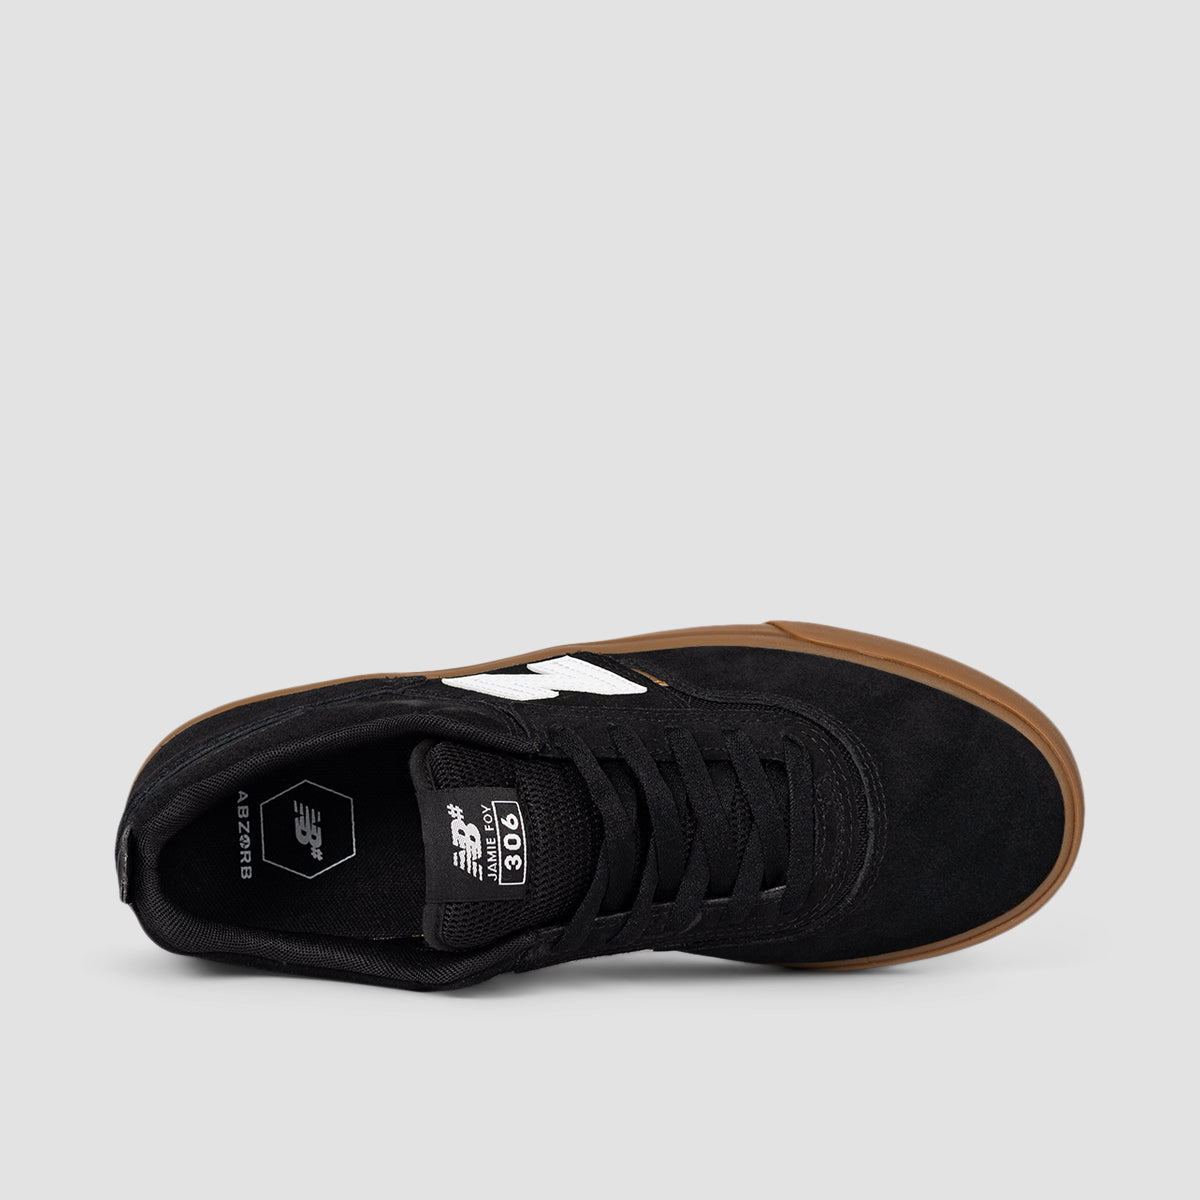 New Balance 306 Jamie Foy Shoes - Black/Gum